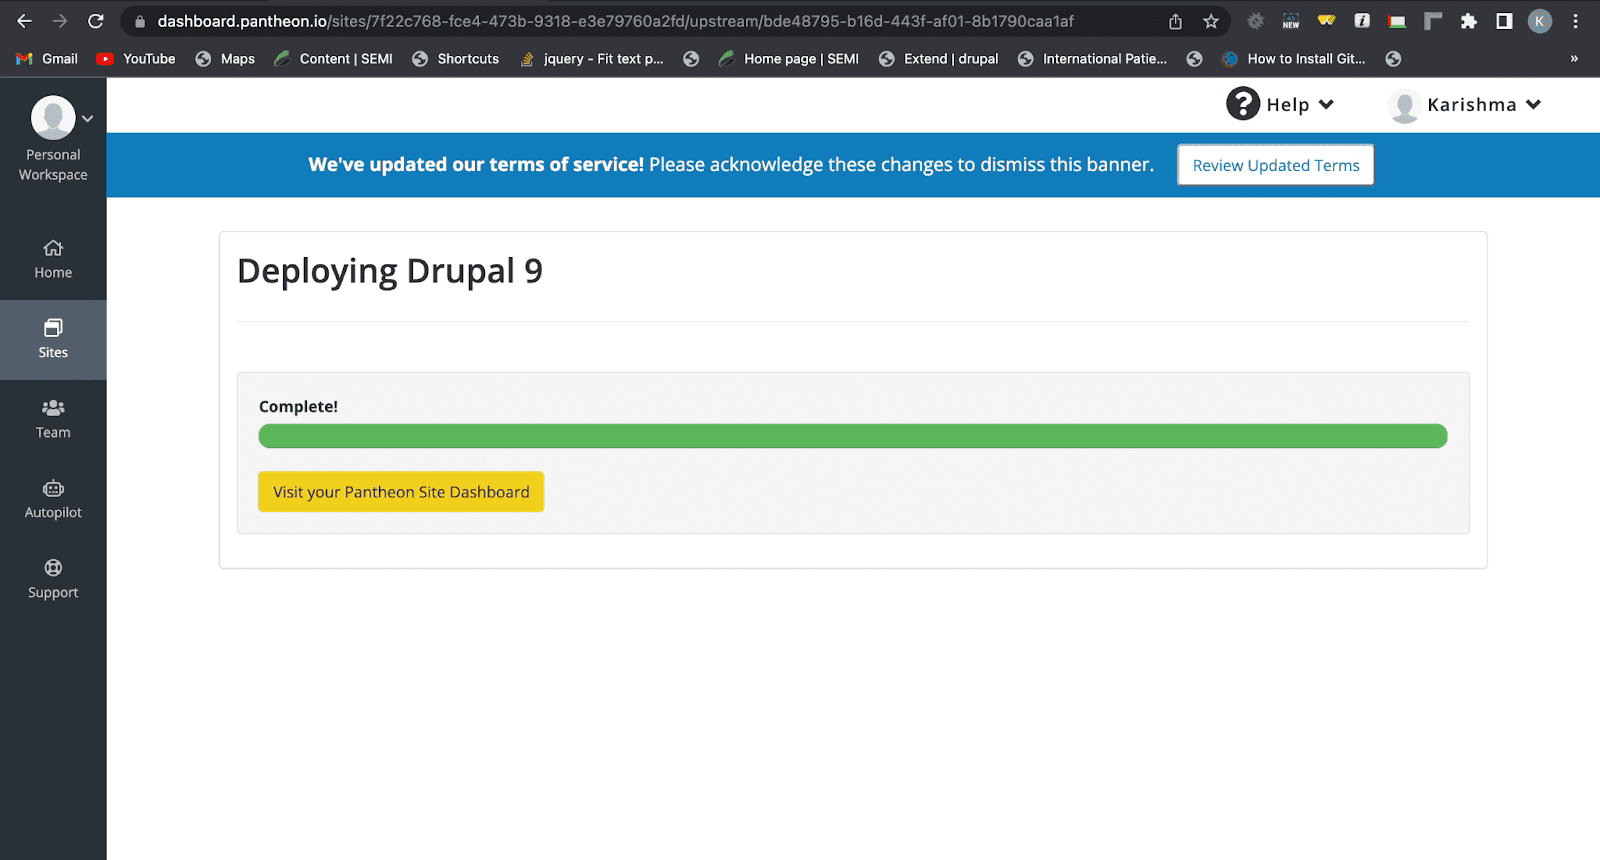 deploying drupal 9